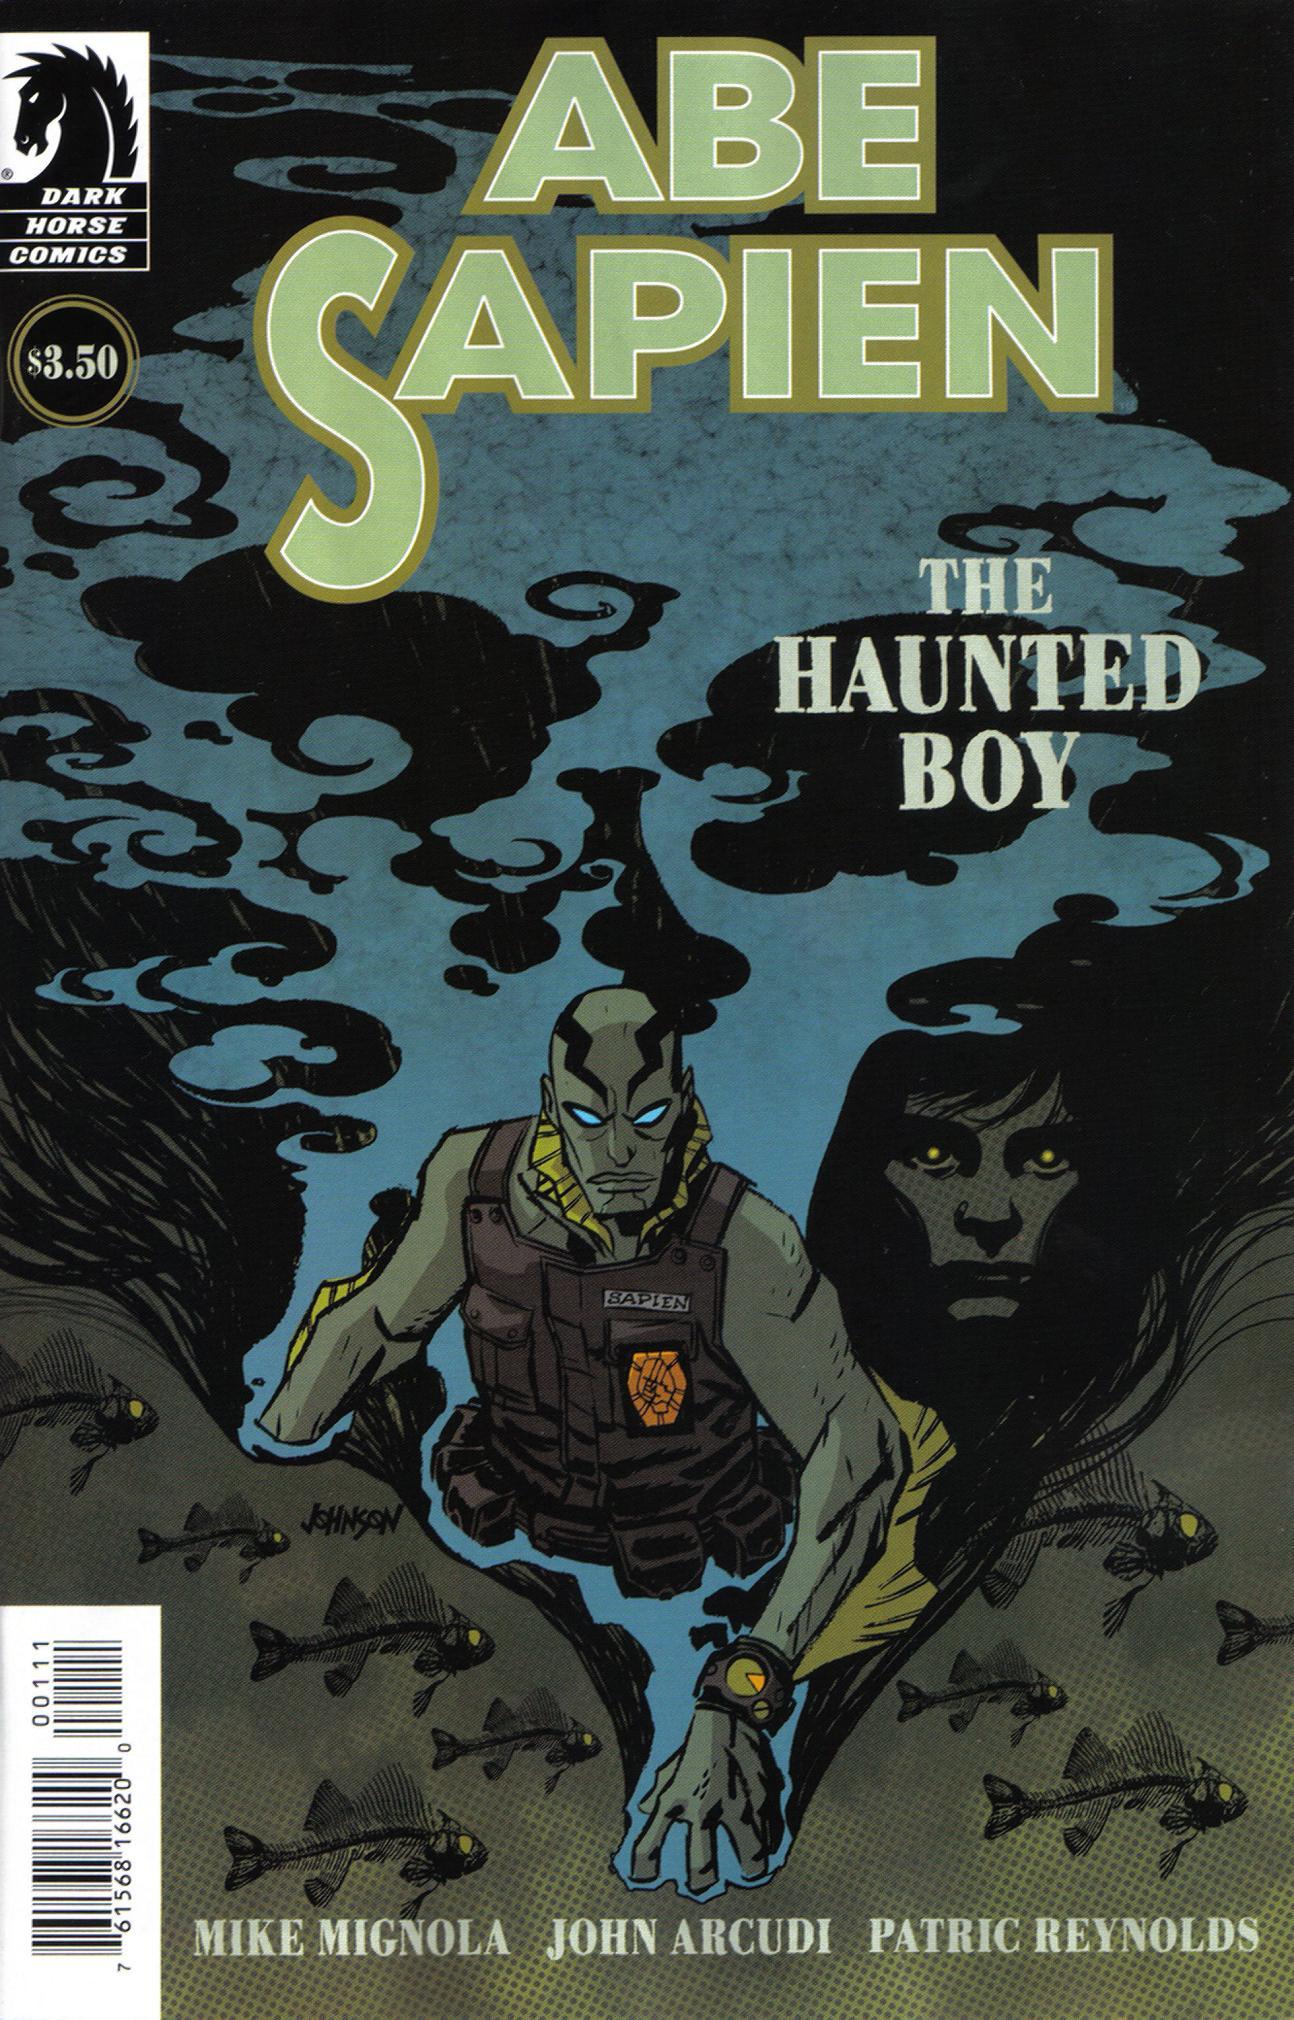 Abe Sapien: The Haunted Boy Vol. 1 #1